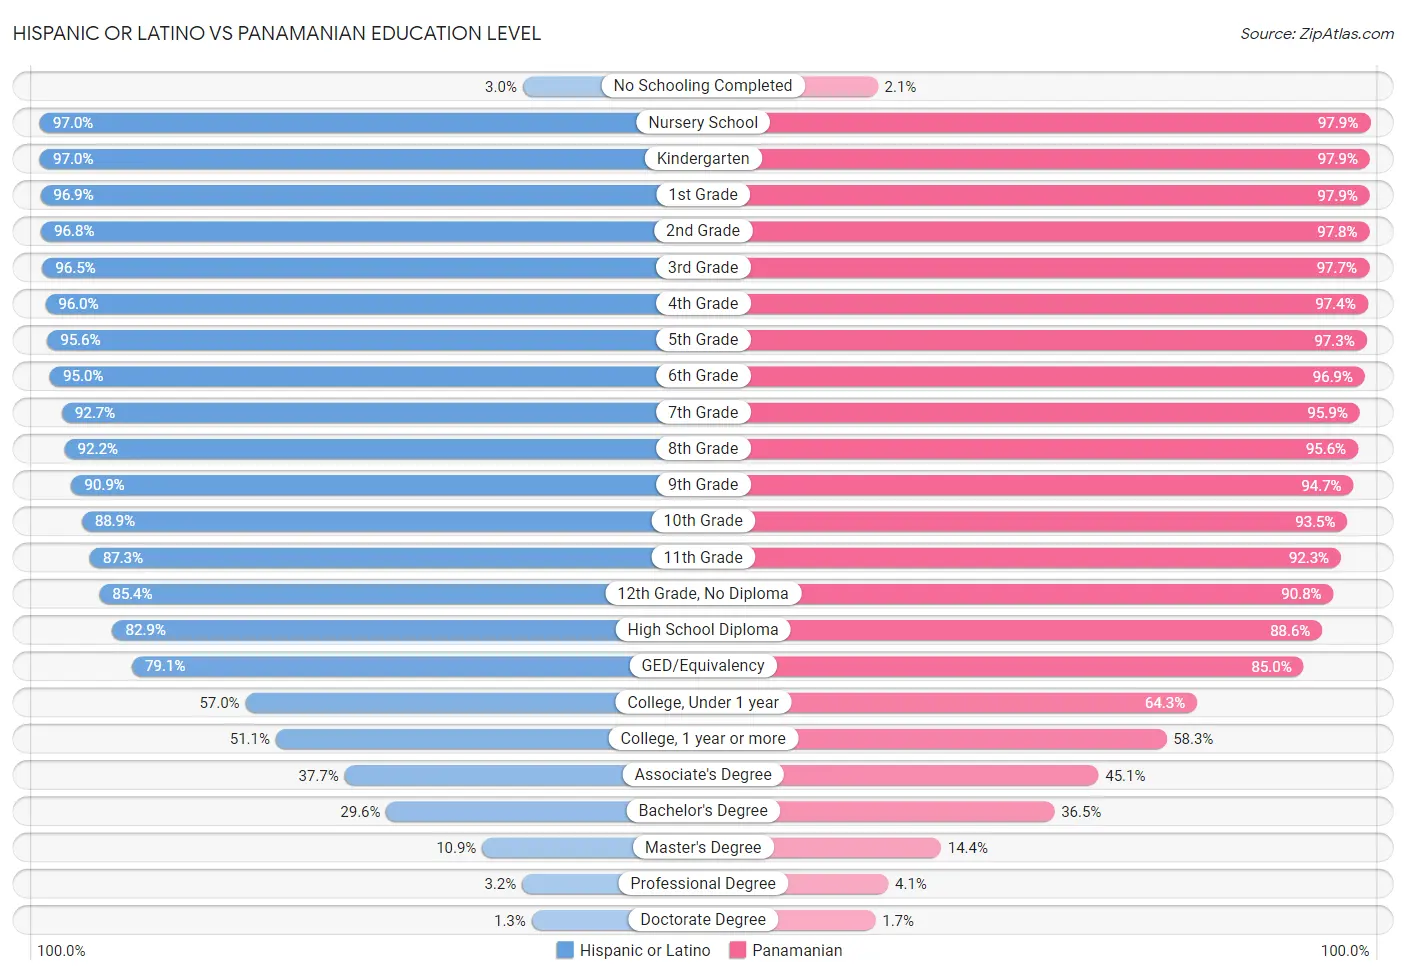 Hispanic or Latino vs Panamanian Education Level